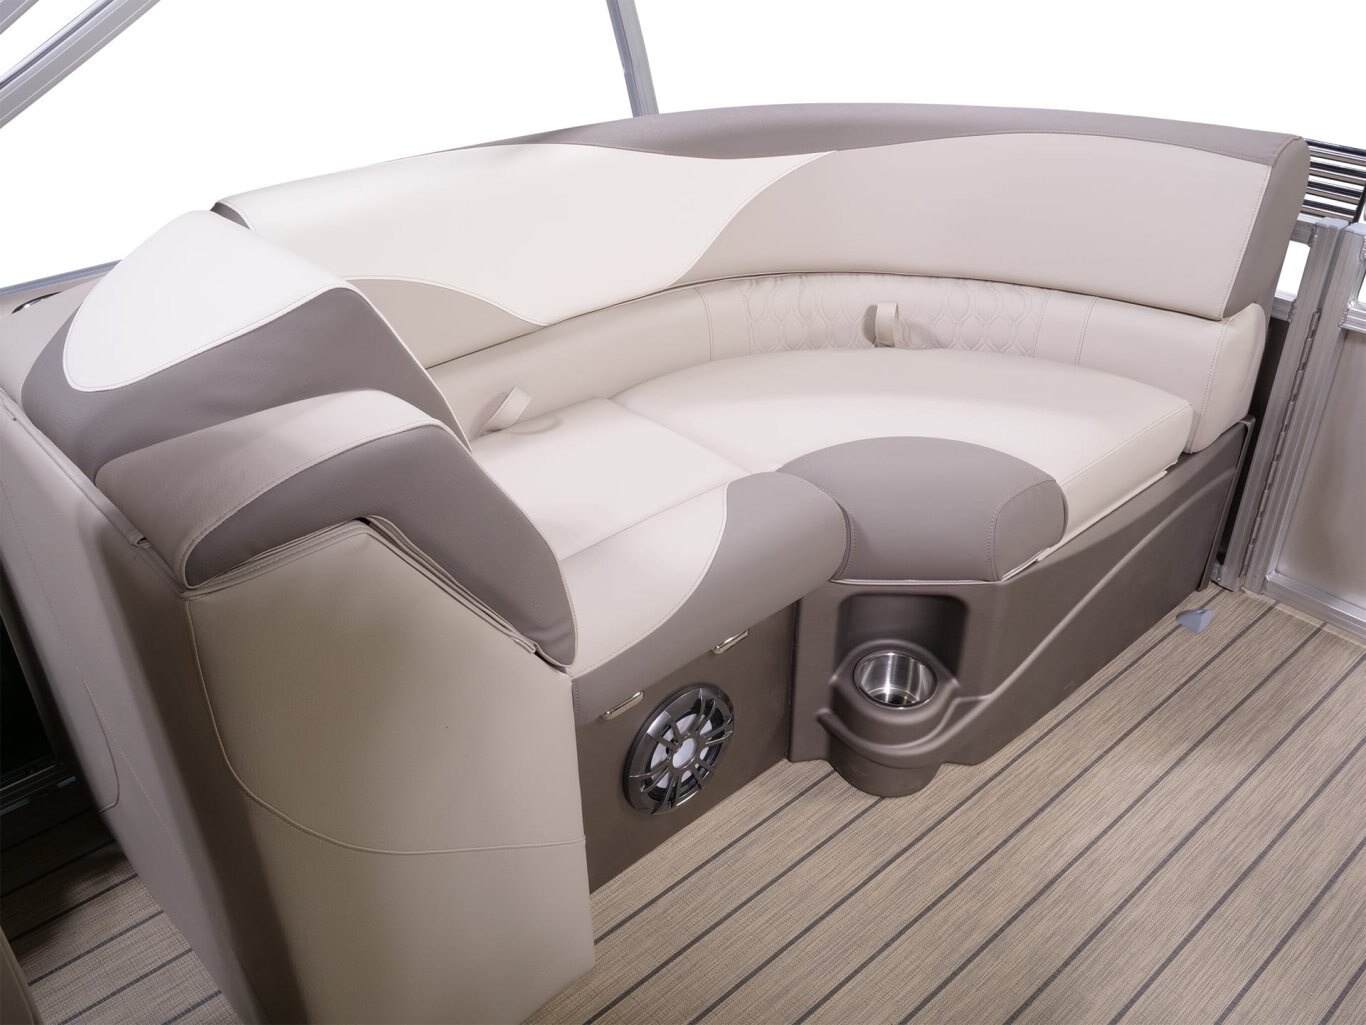 Legend Boats Q Series Lounge Sport Pro